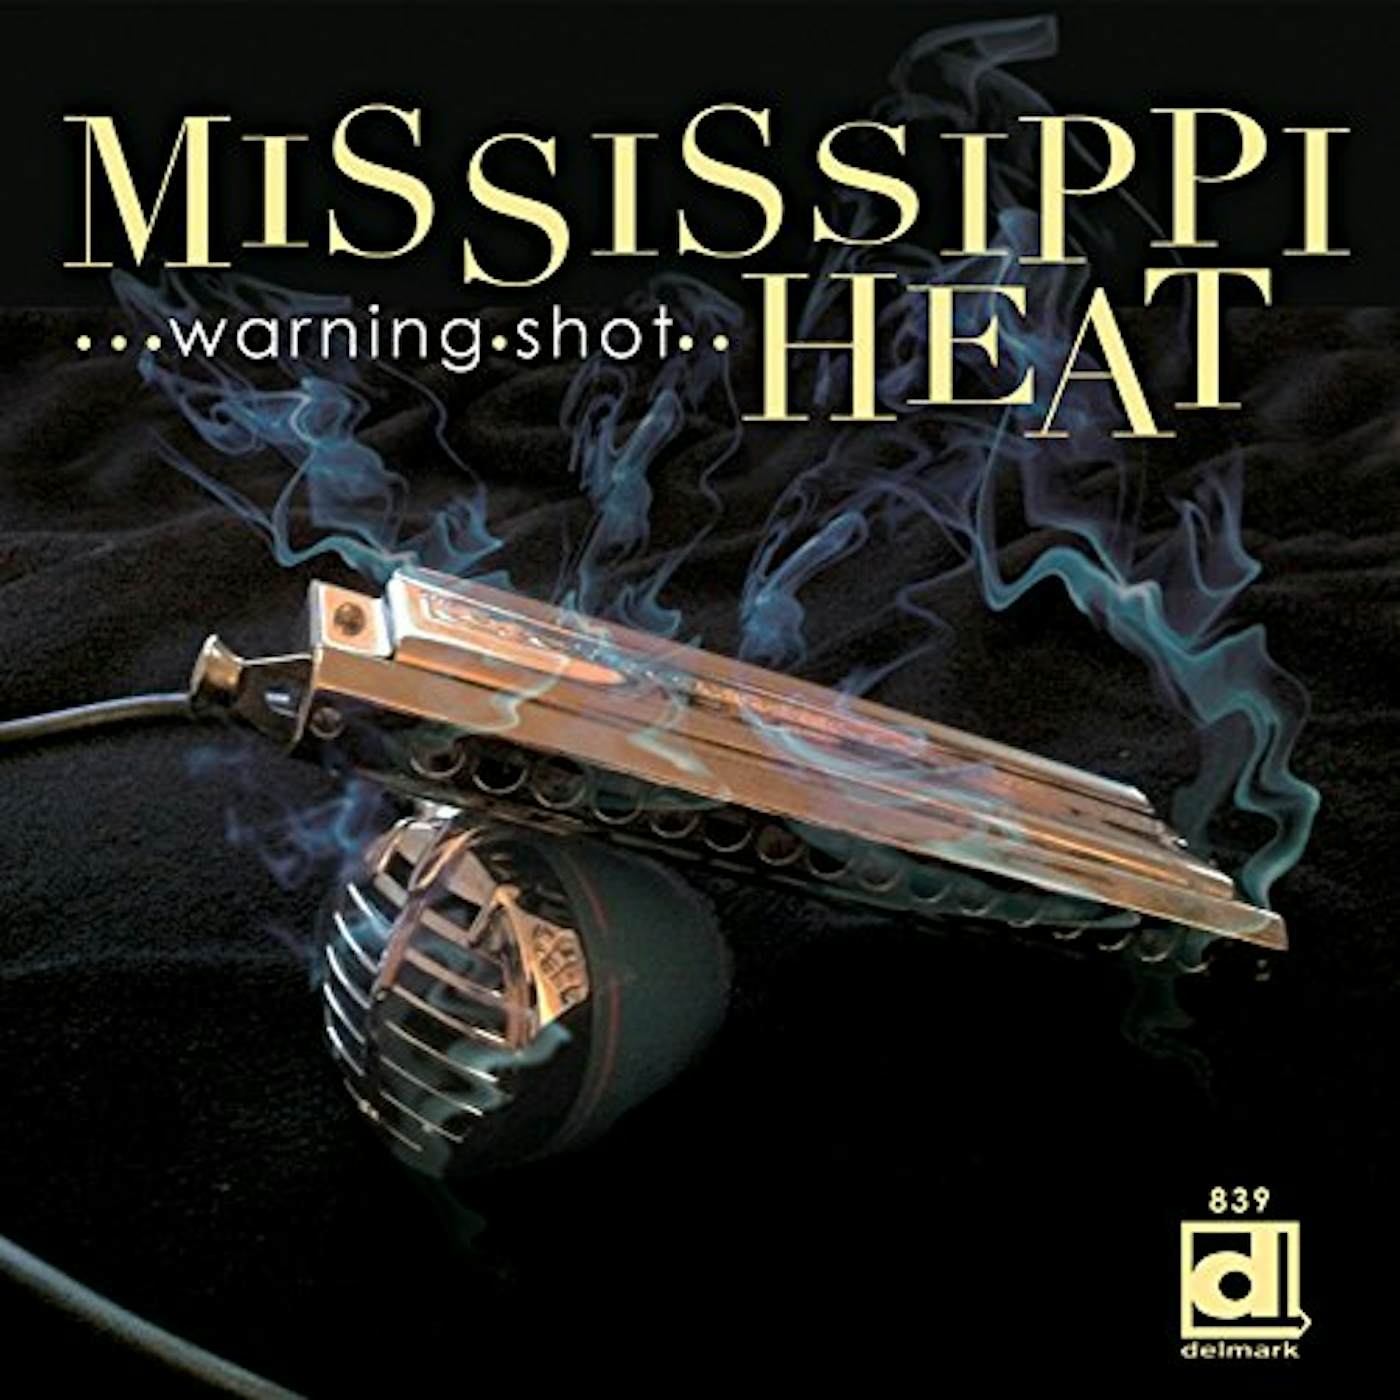 Mississippi Heat WARNING SHOT CD